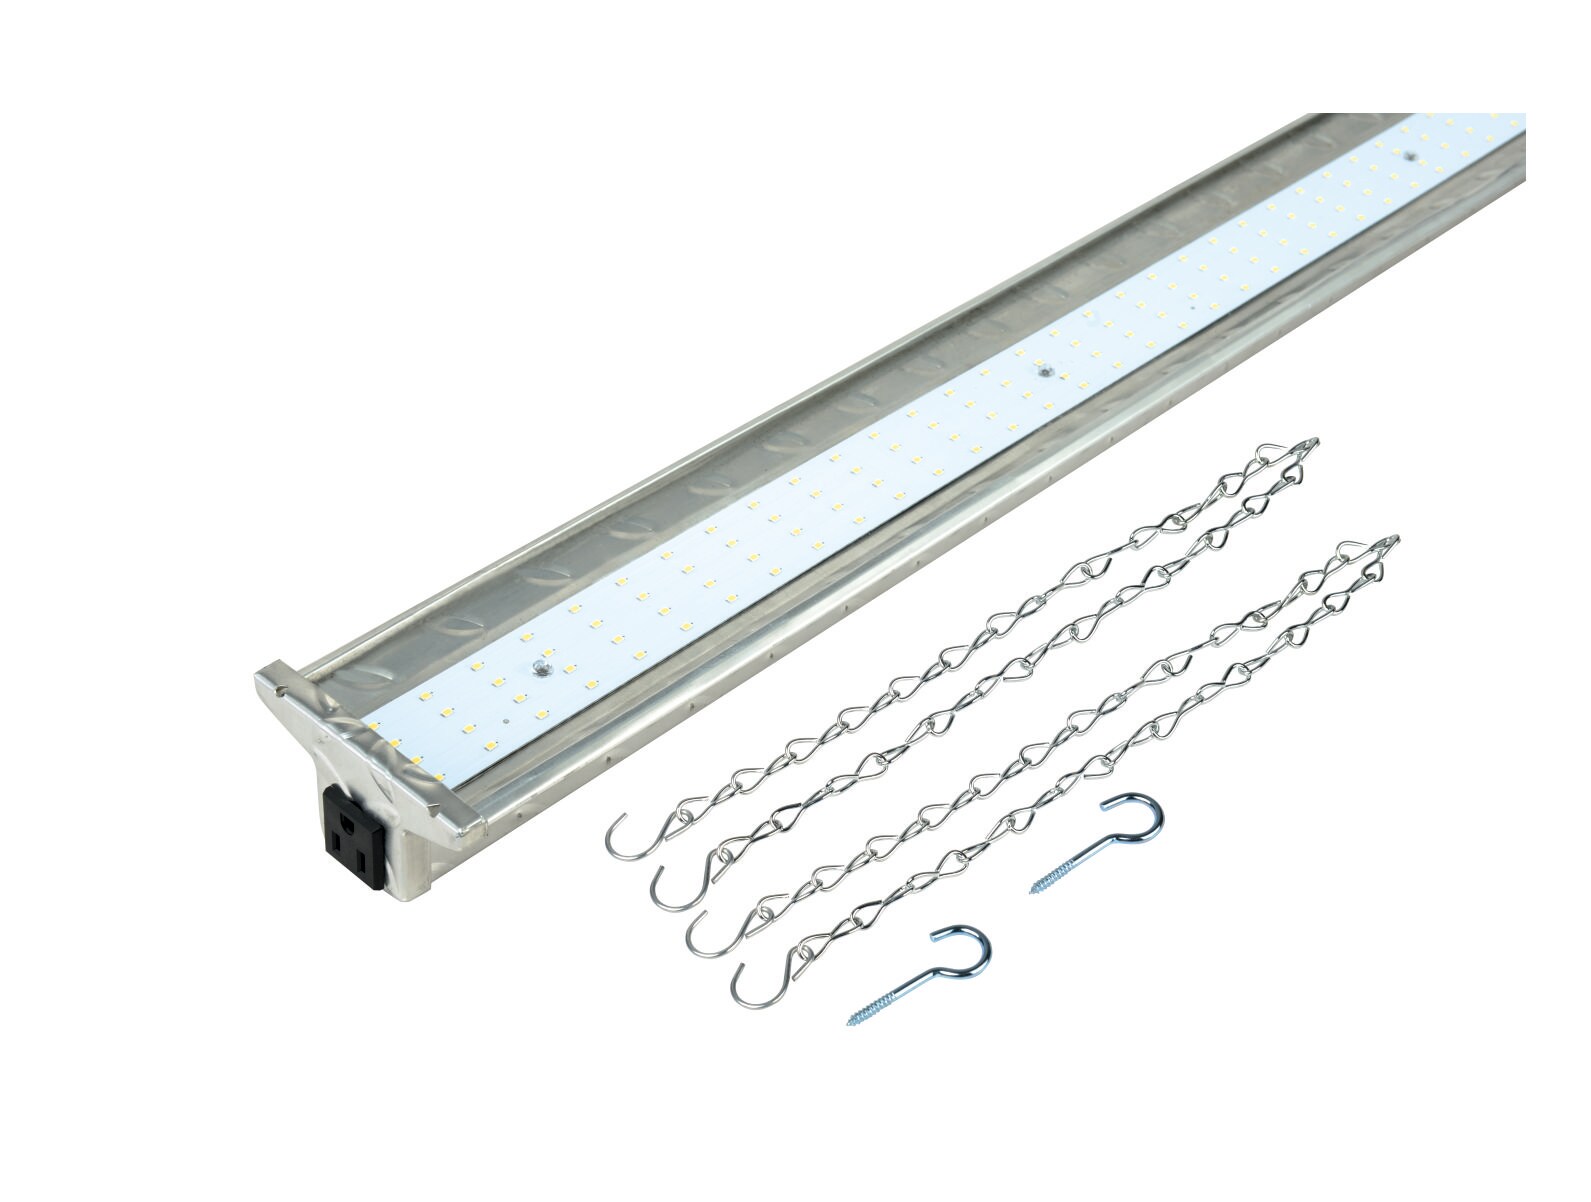 10,000 Lumen, 4 Ft. Linkable Diamond Plate LED Hanging Shop Light